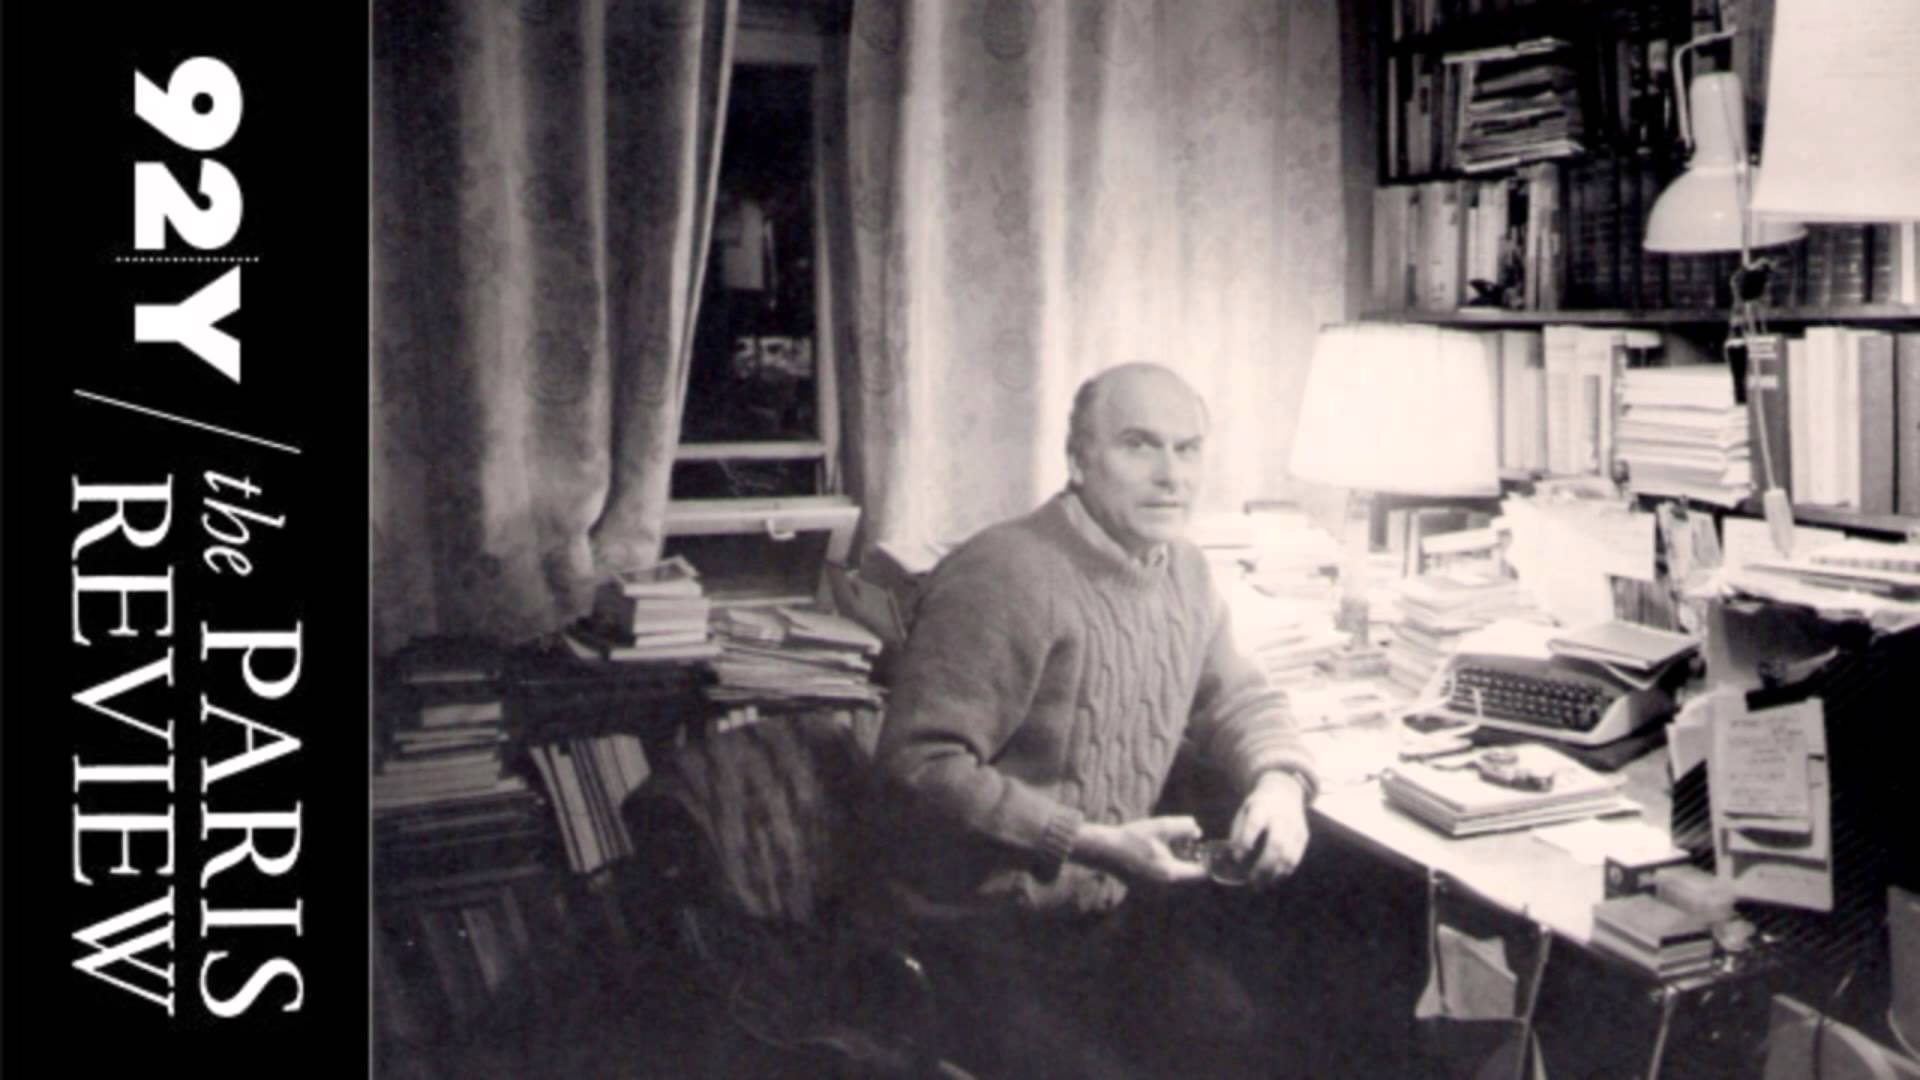 92Y / The Paris Review Interview Series: Ryszard Kapuściński